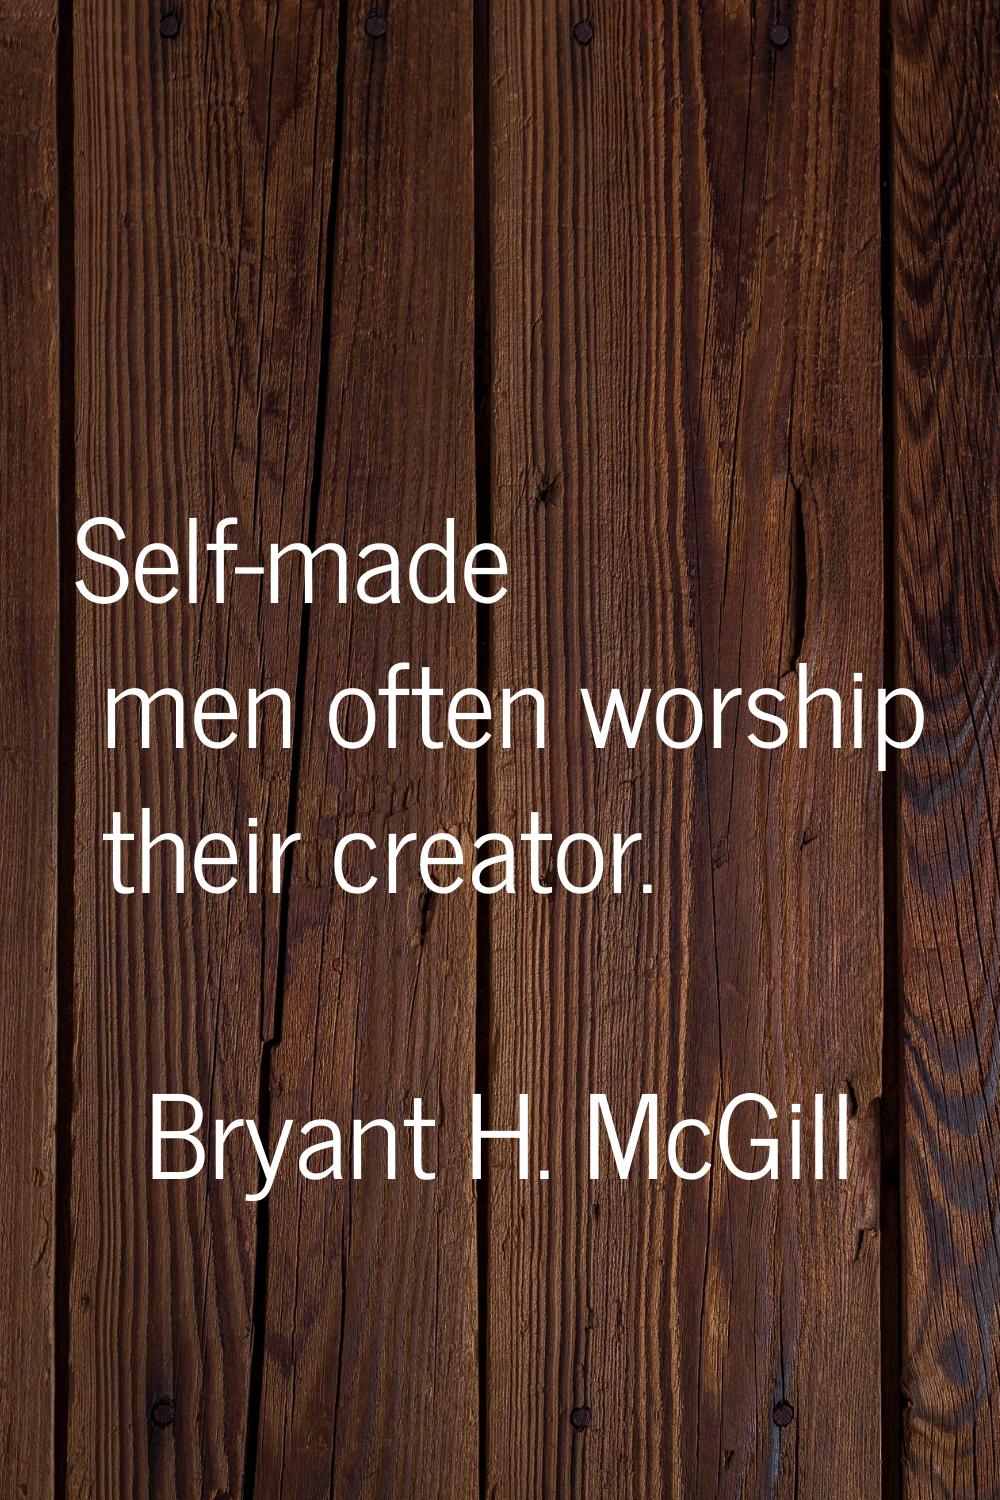 Self-made men often worship their creator.